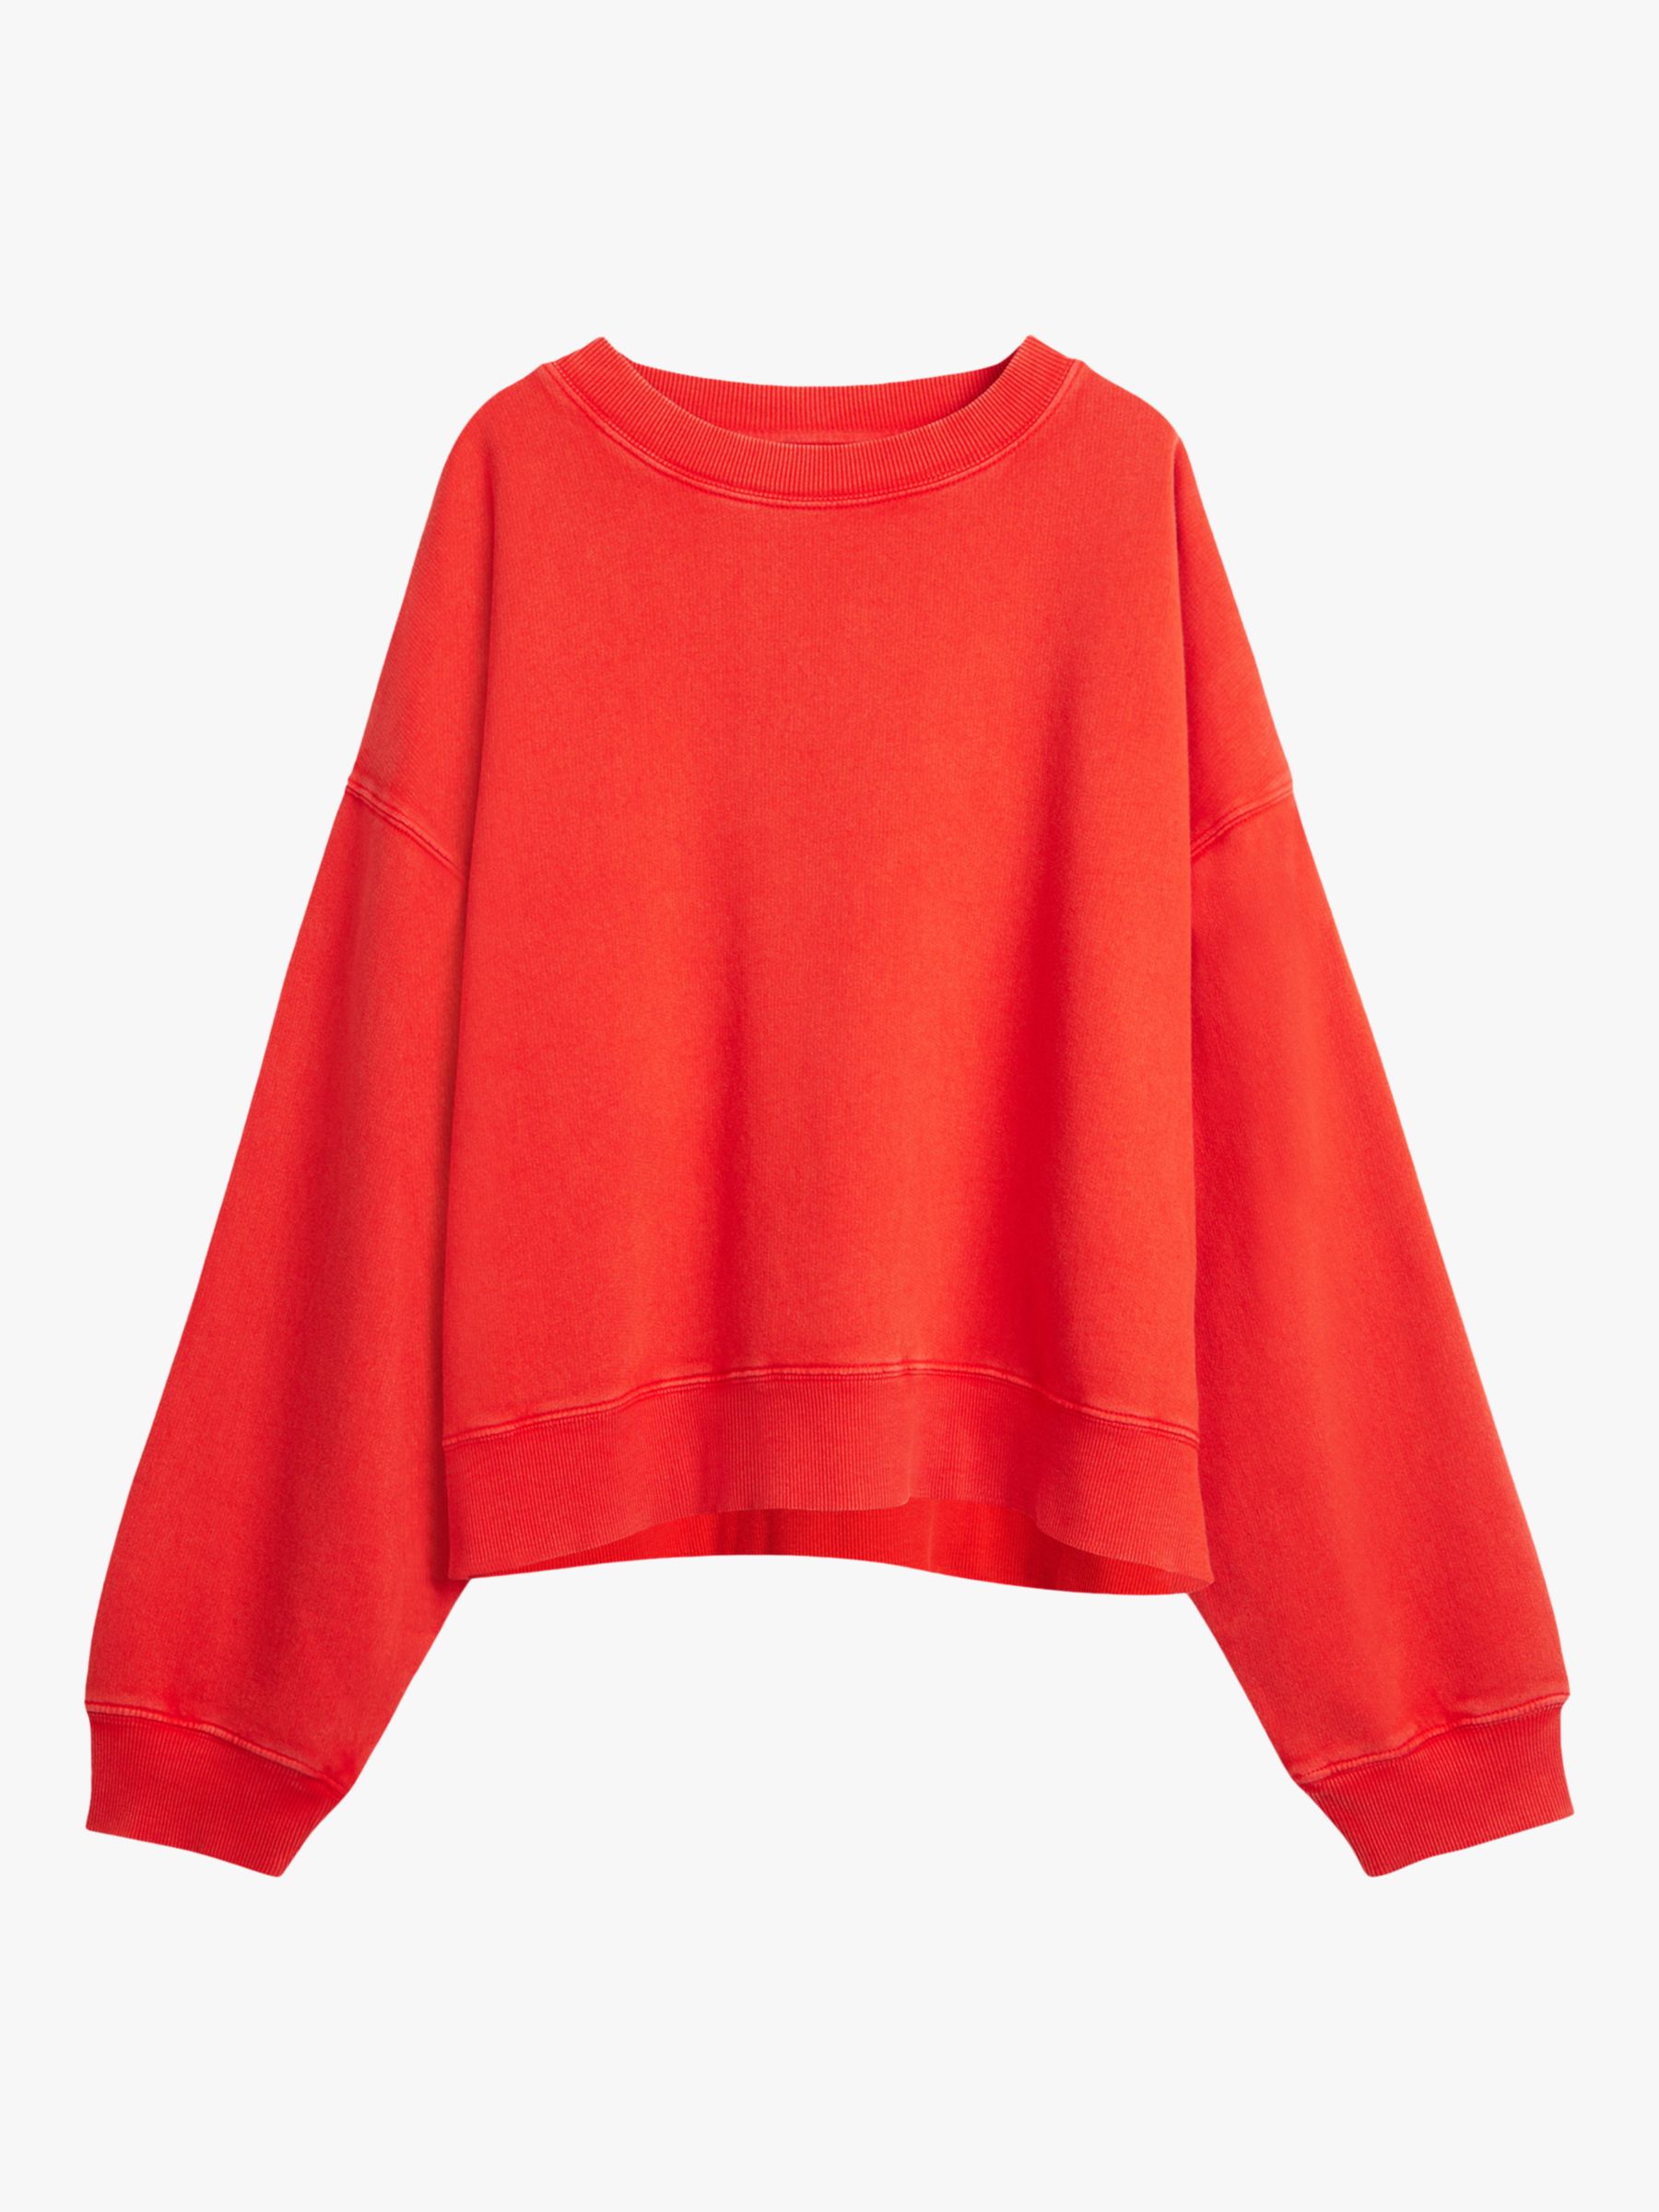 HUSH Rozanne Boxy Sweatshirt, Bright Red, L